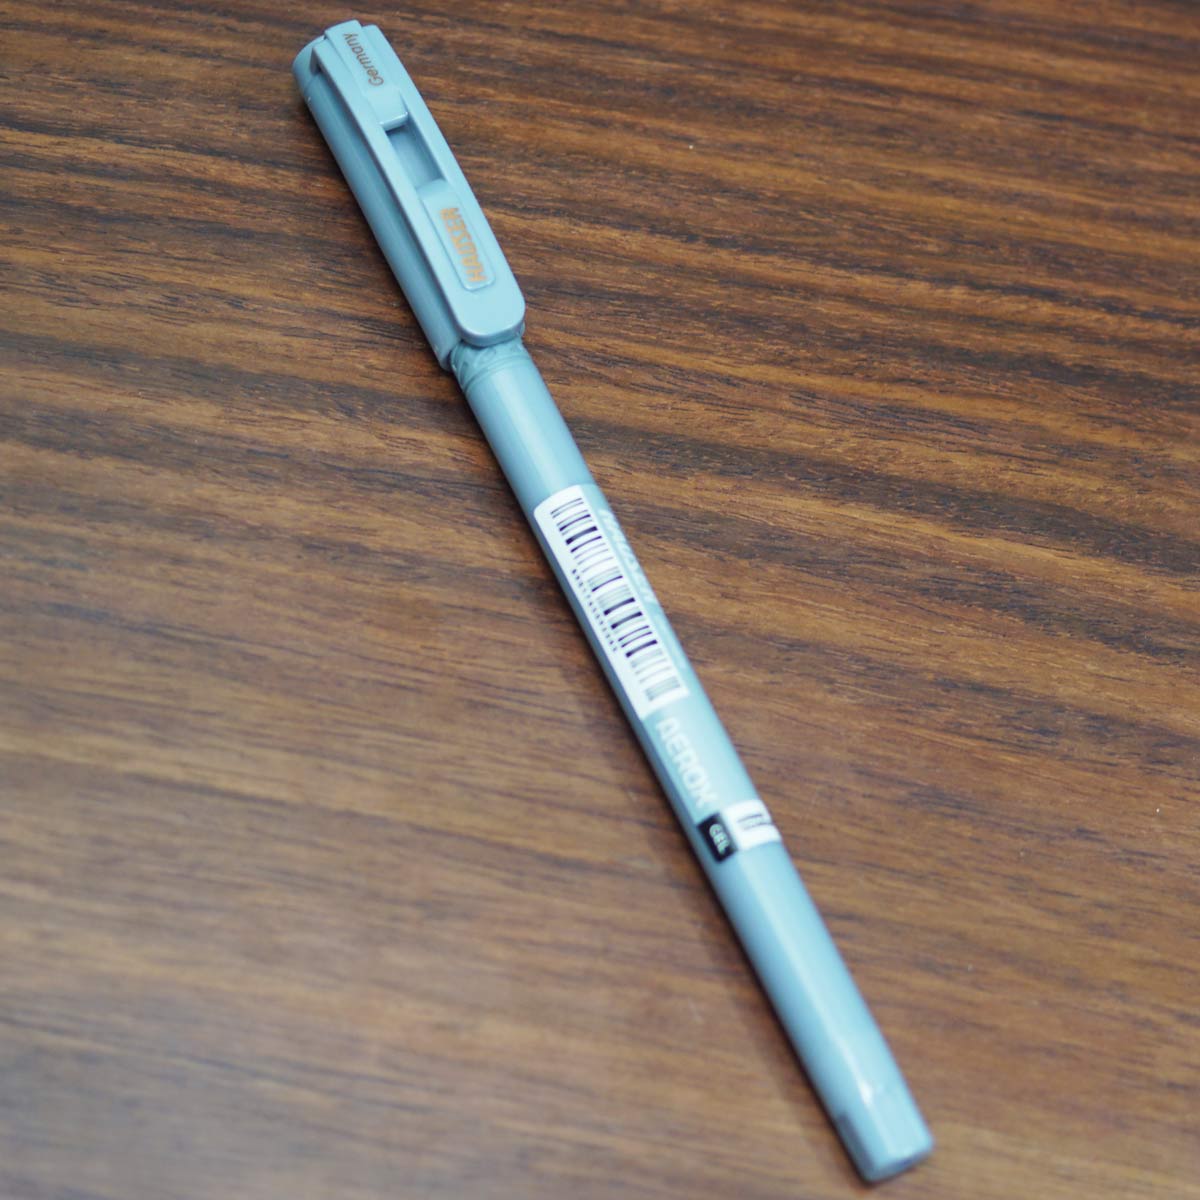 Hauser Aerox Grey Color Body With Cap Fine Tip Black Writing Cap Type Gel Pen SKU 23499